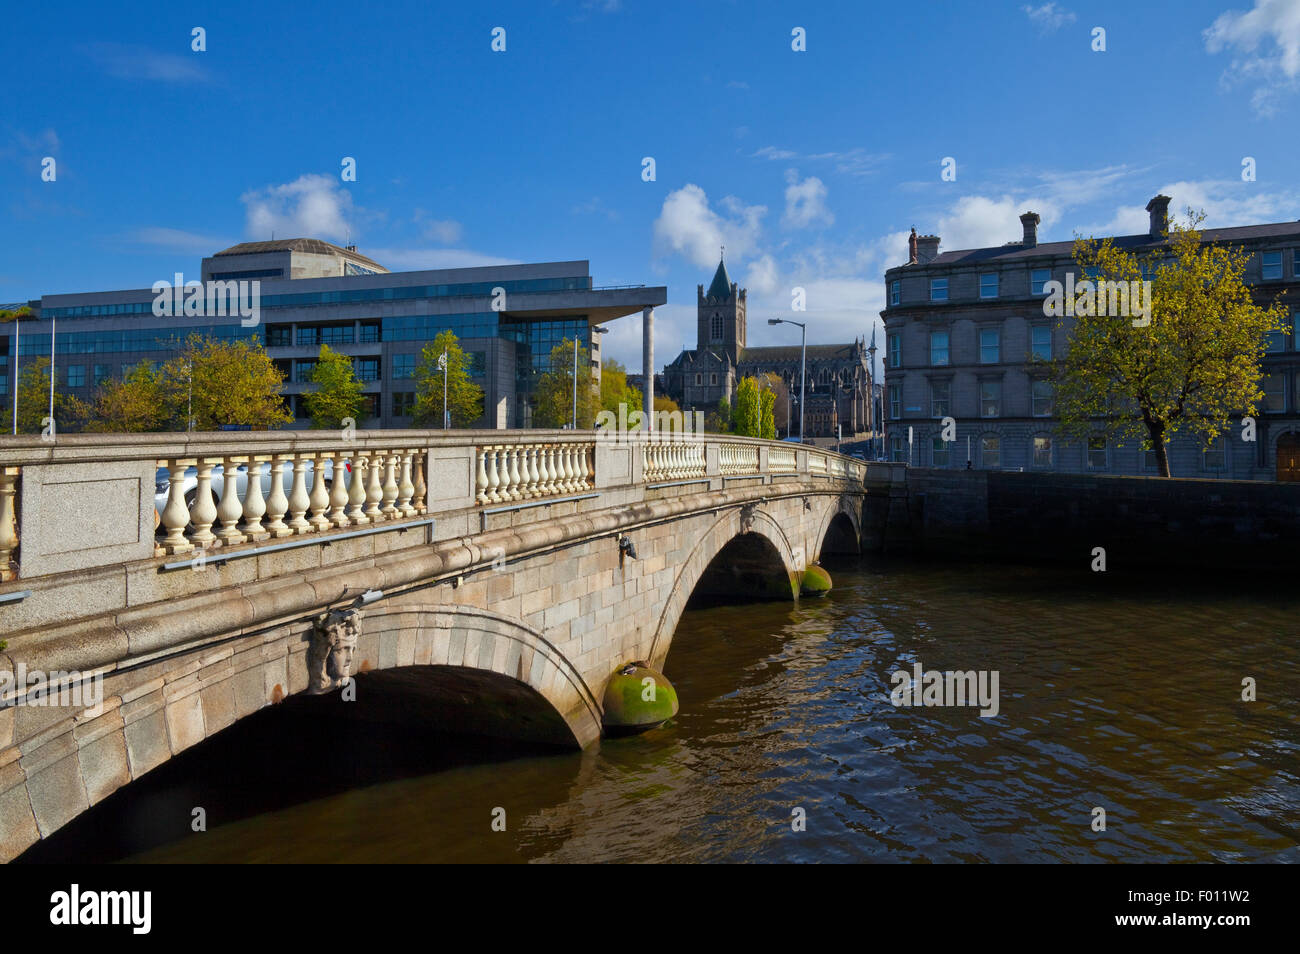 O' Donovan Rossa Brücke (1813) mit Christ Church Cathedral und Dublin Korporation Civic Offices auf Holz Kai. Dublin City, Irland Stockfoto